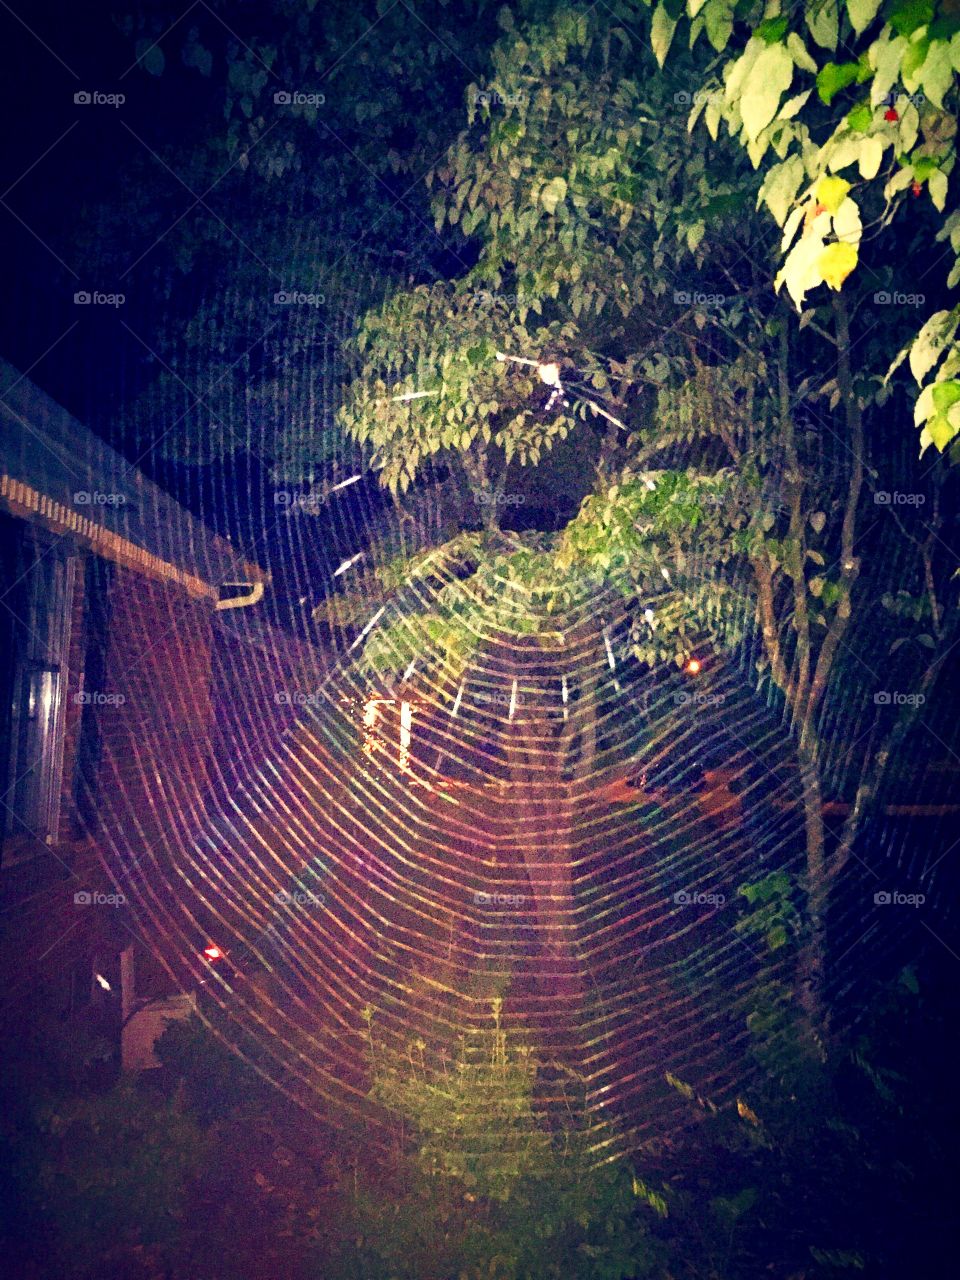 Spider web at night 